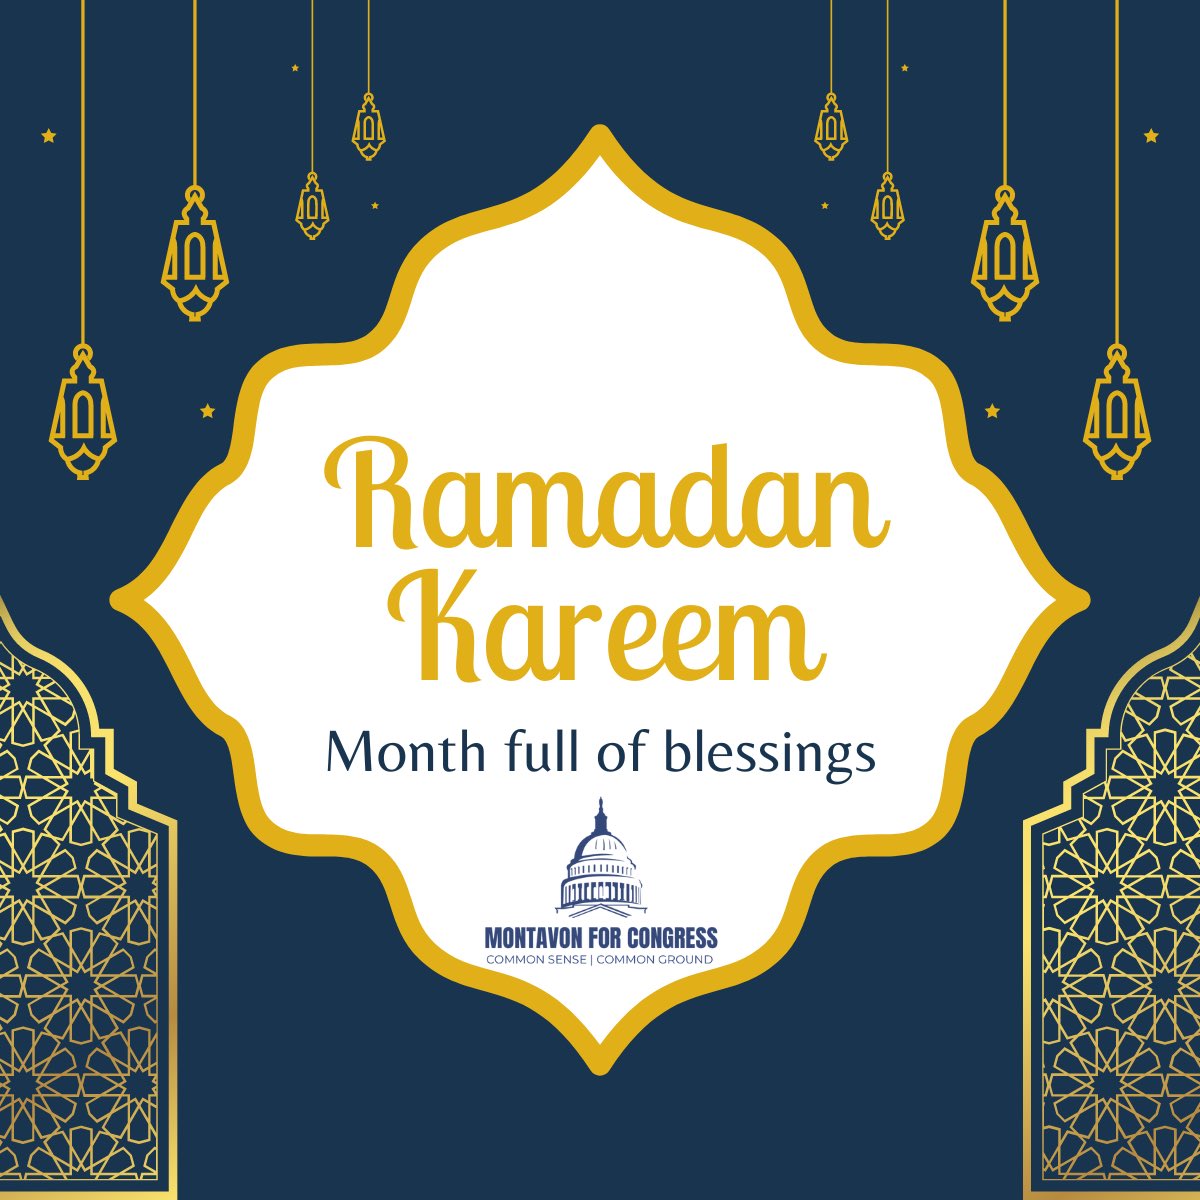 Wishing all who celebrate a peaceful and prosperous Ramadan!